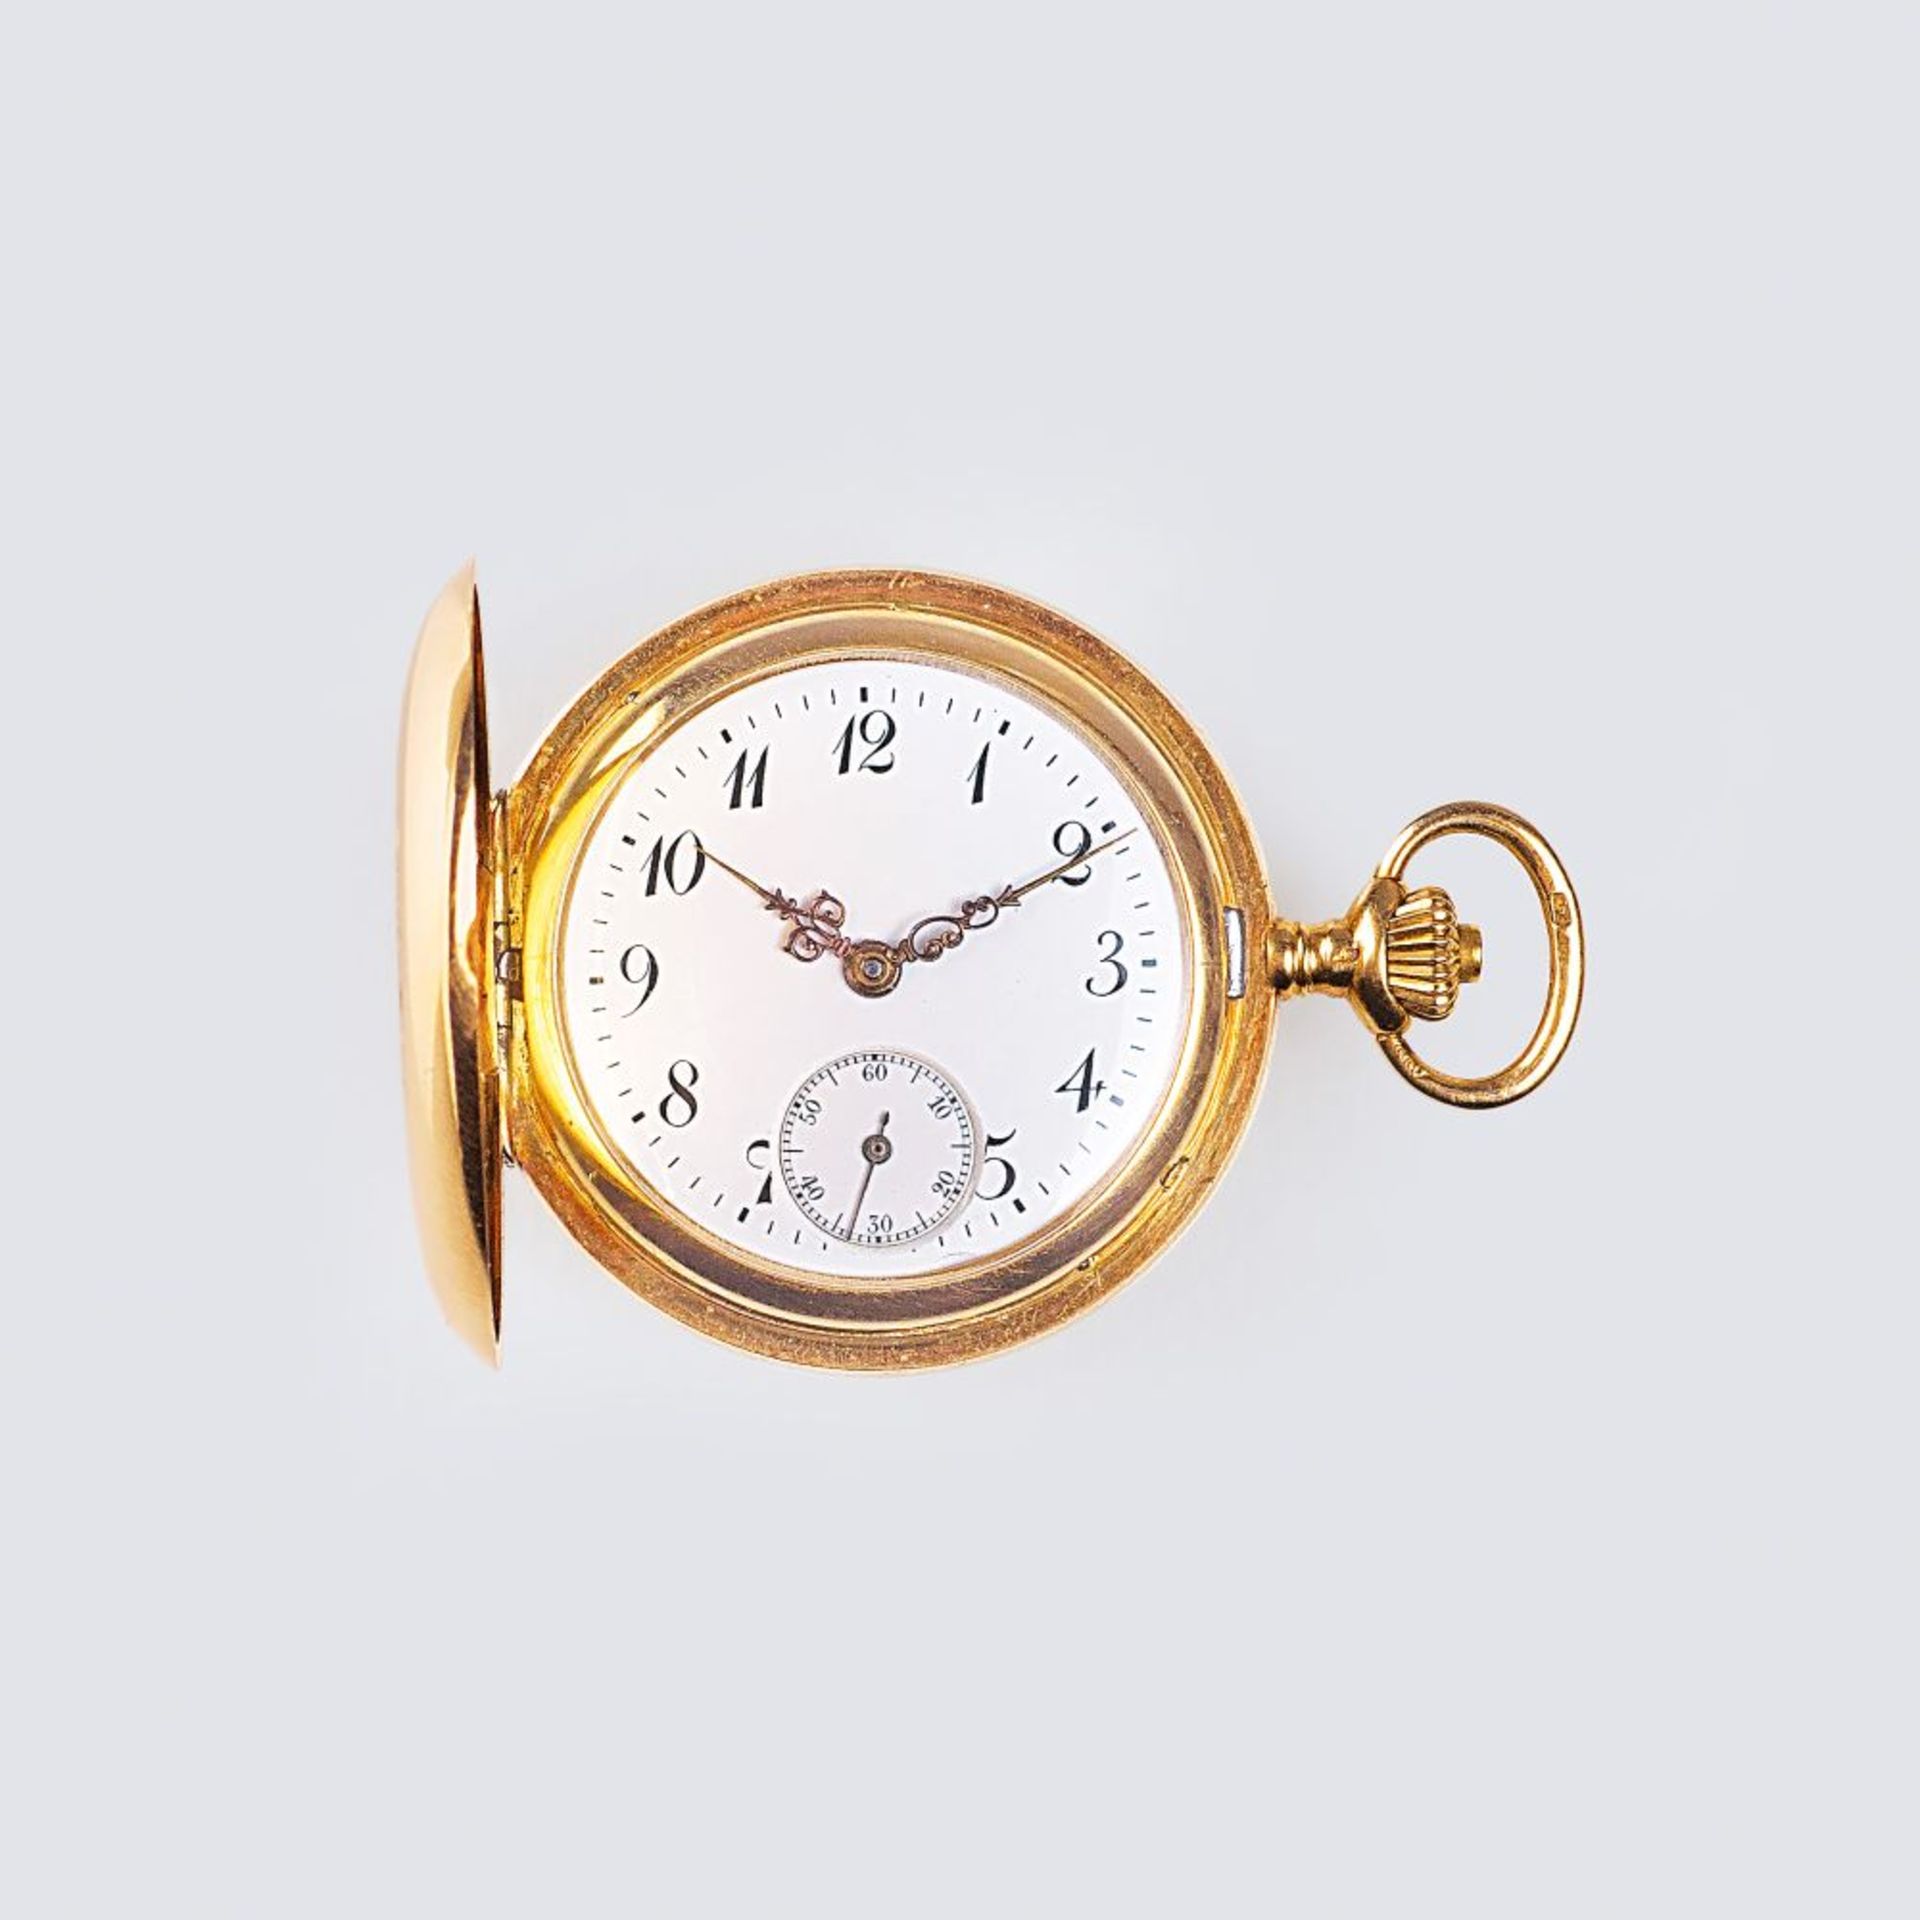 IWC - International Watch Co. gegr. 1868 in Schaffhausen. Damen-Savonette an Gold-Kette.